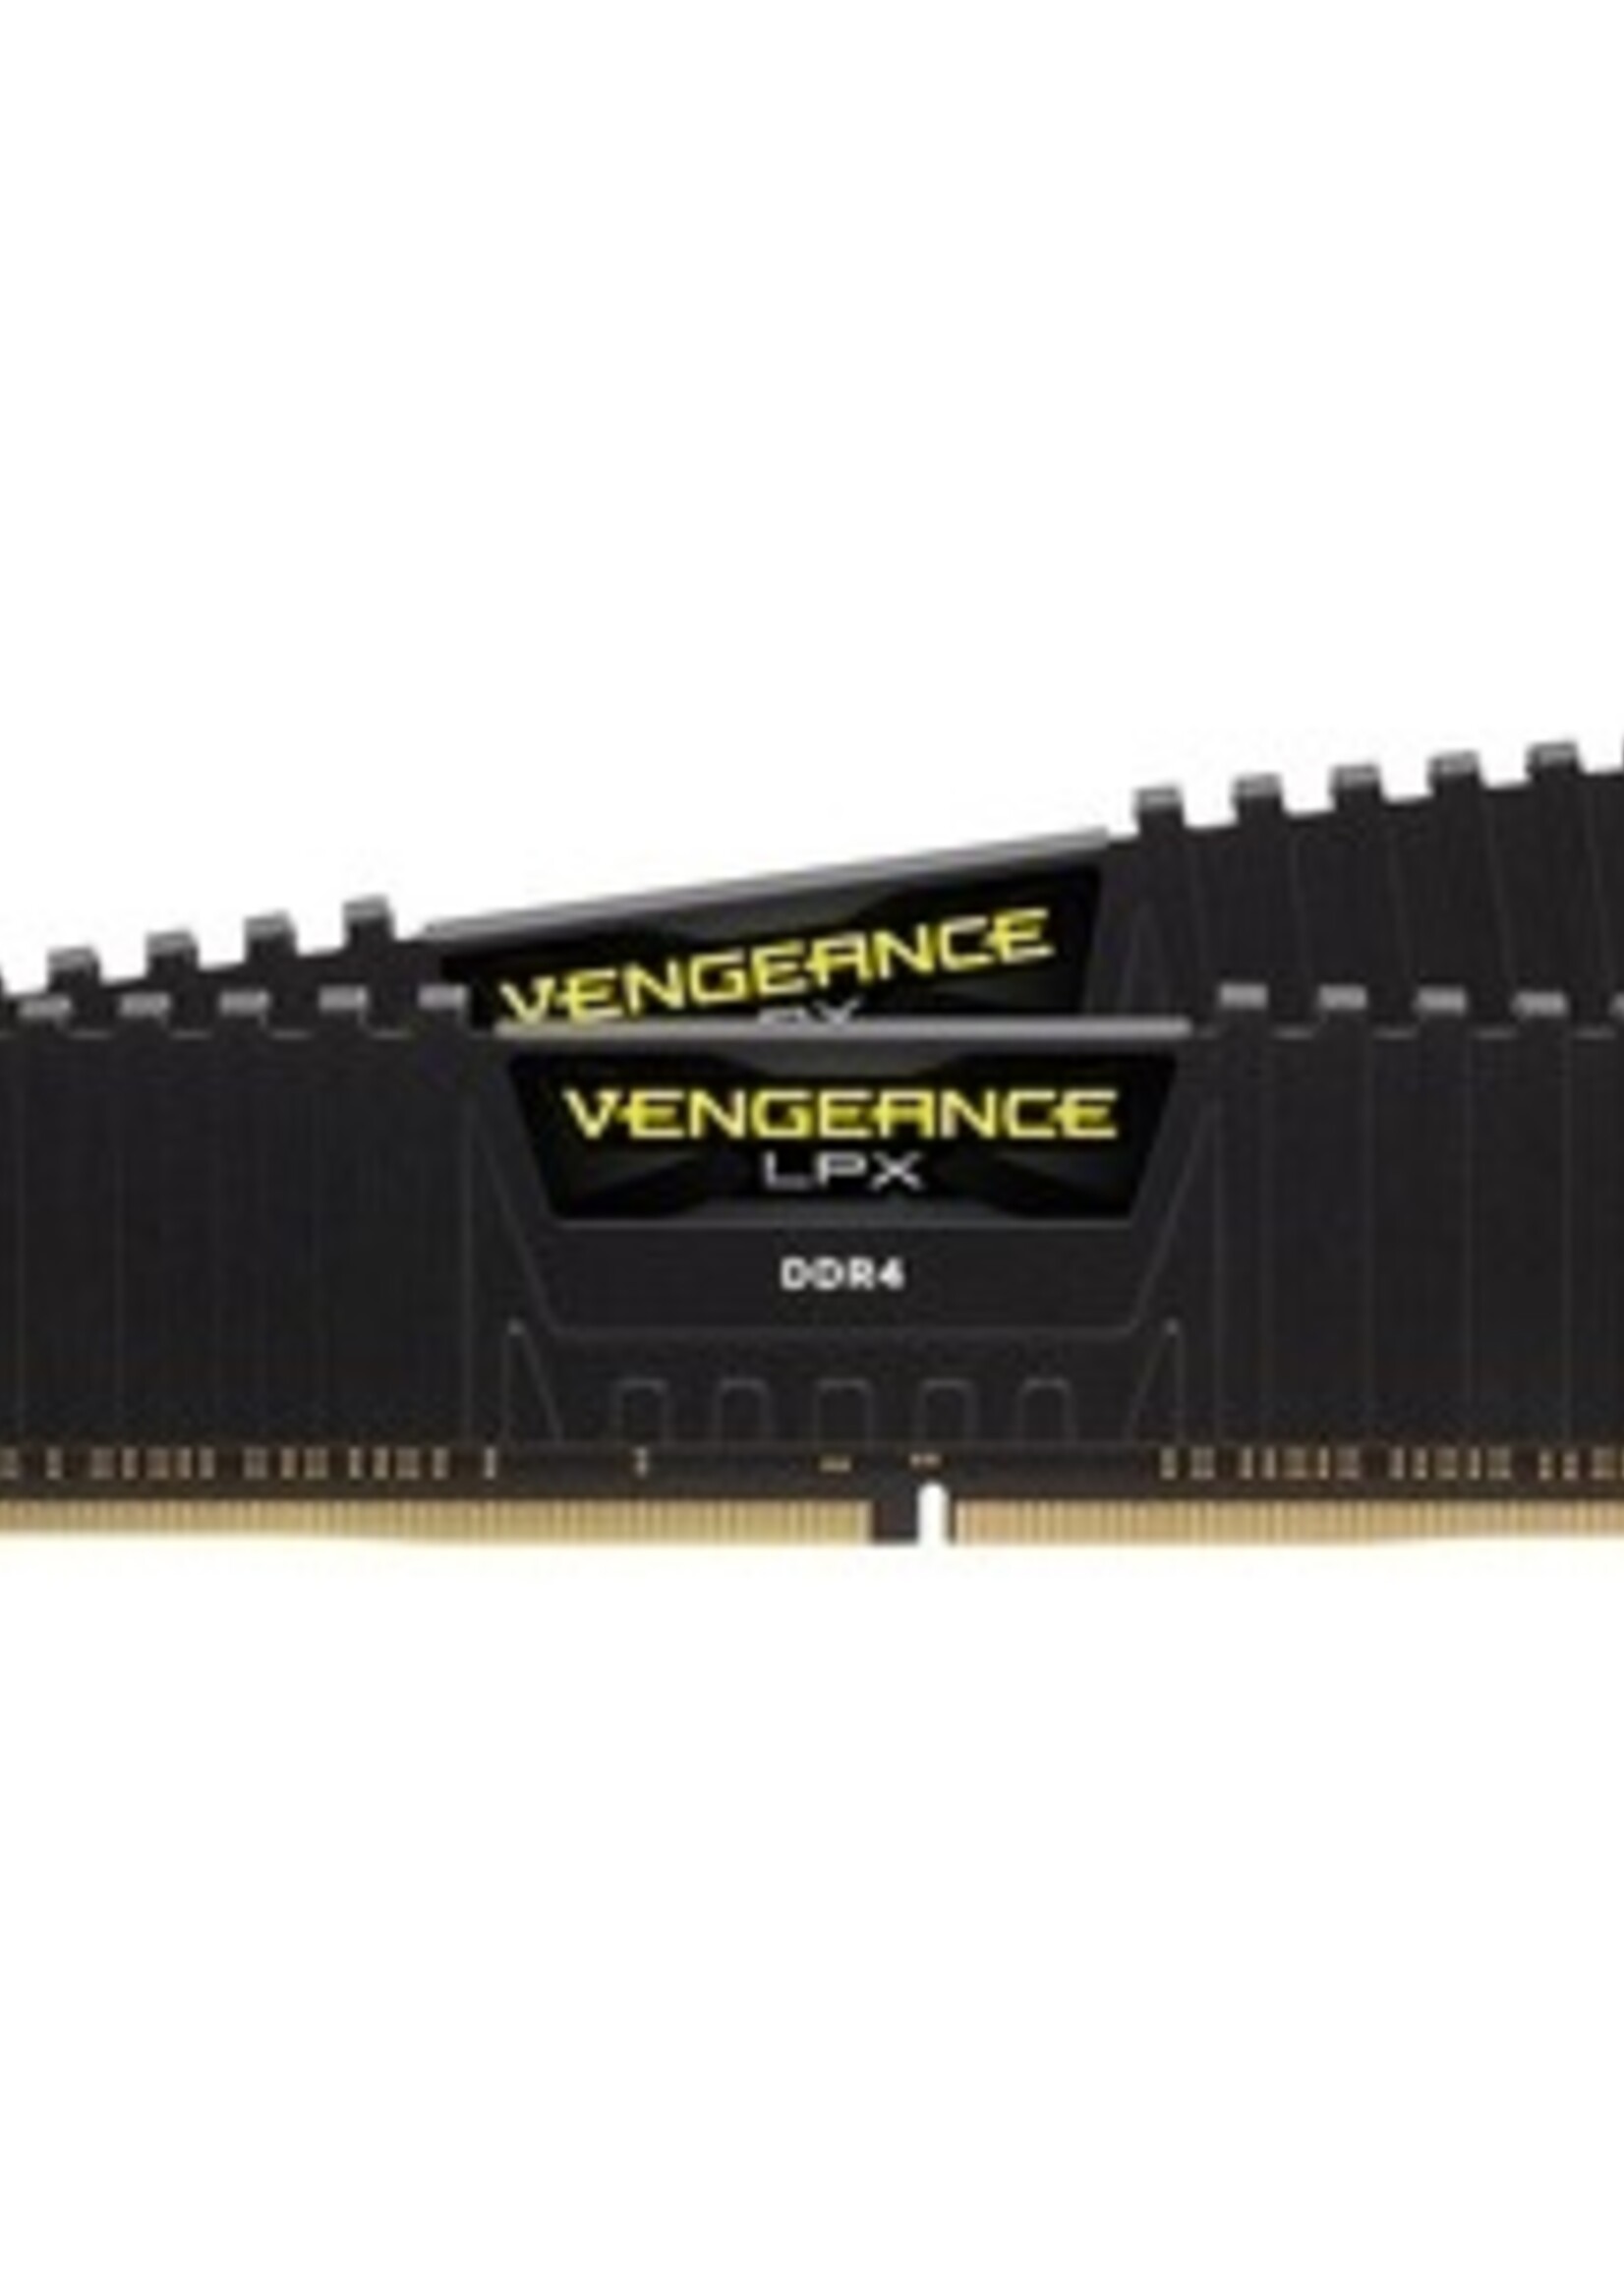 Cosair 2X8gb DDR4 3200 Vengeance LPX Series